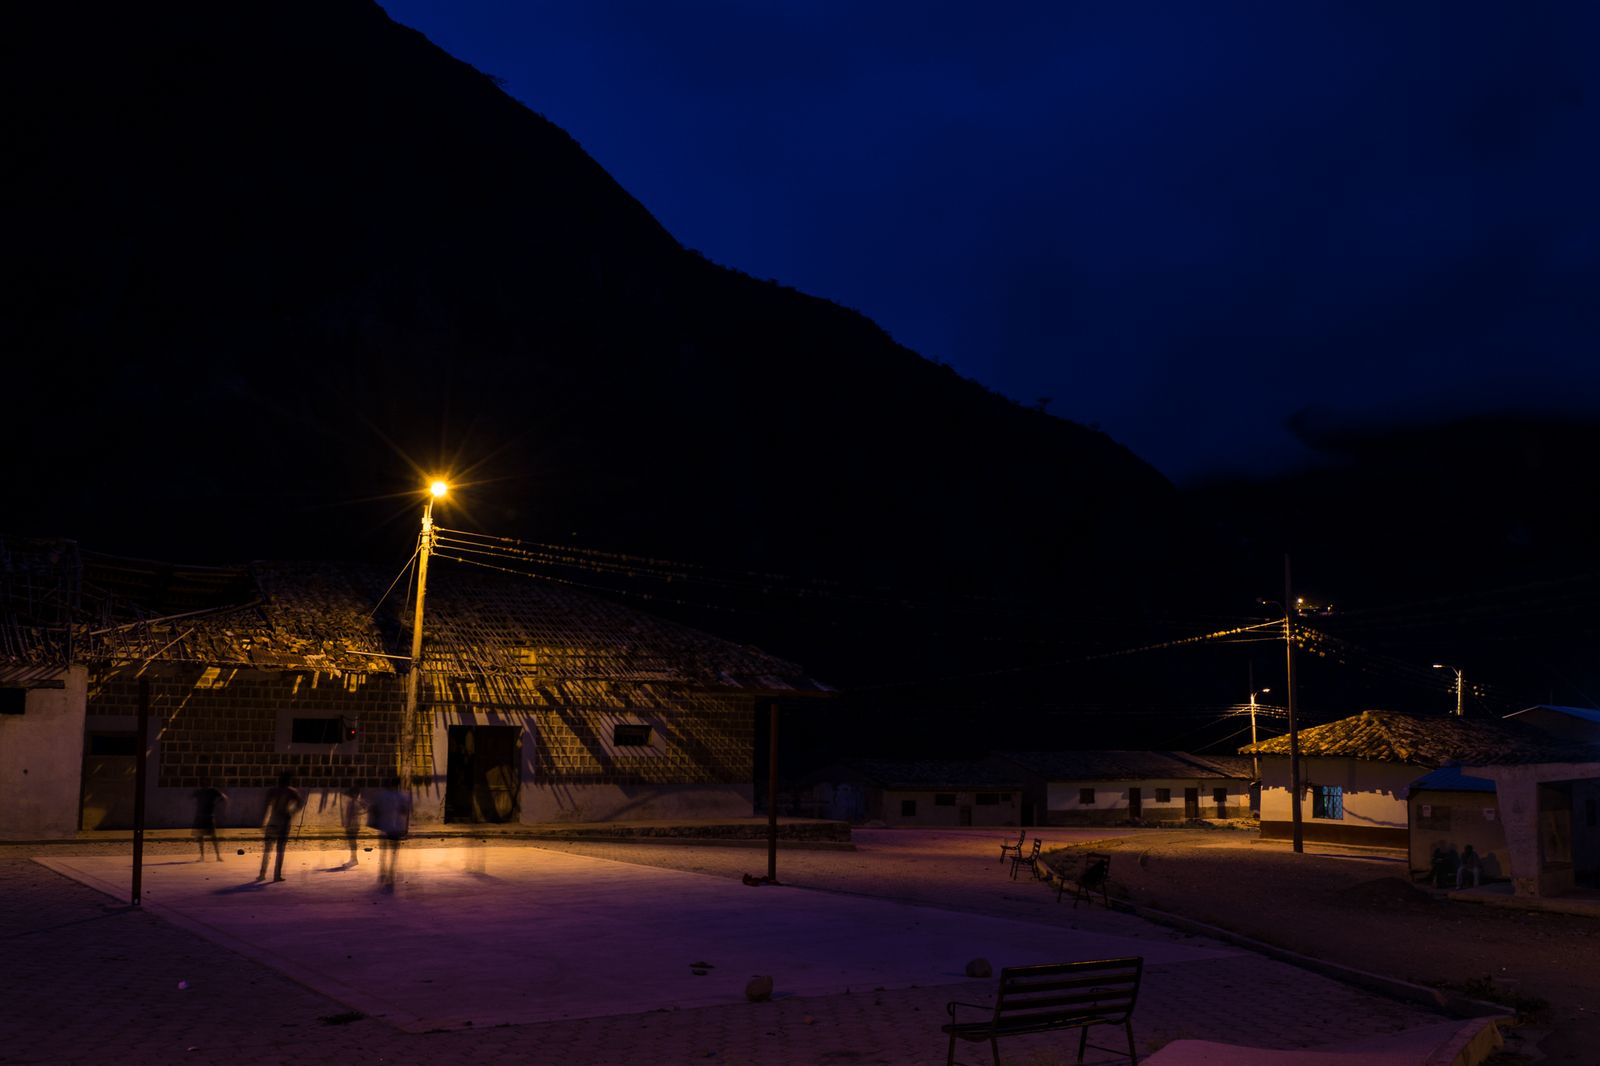 © Andrés Yépez - Image from the Estación Carchi photography project